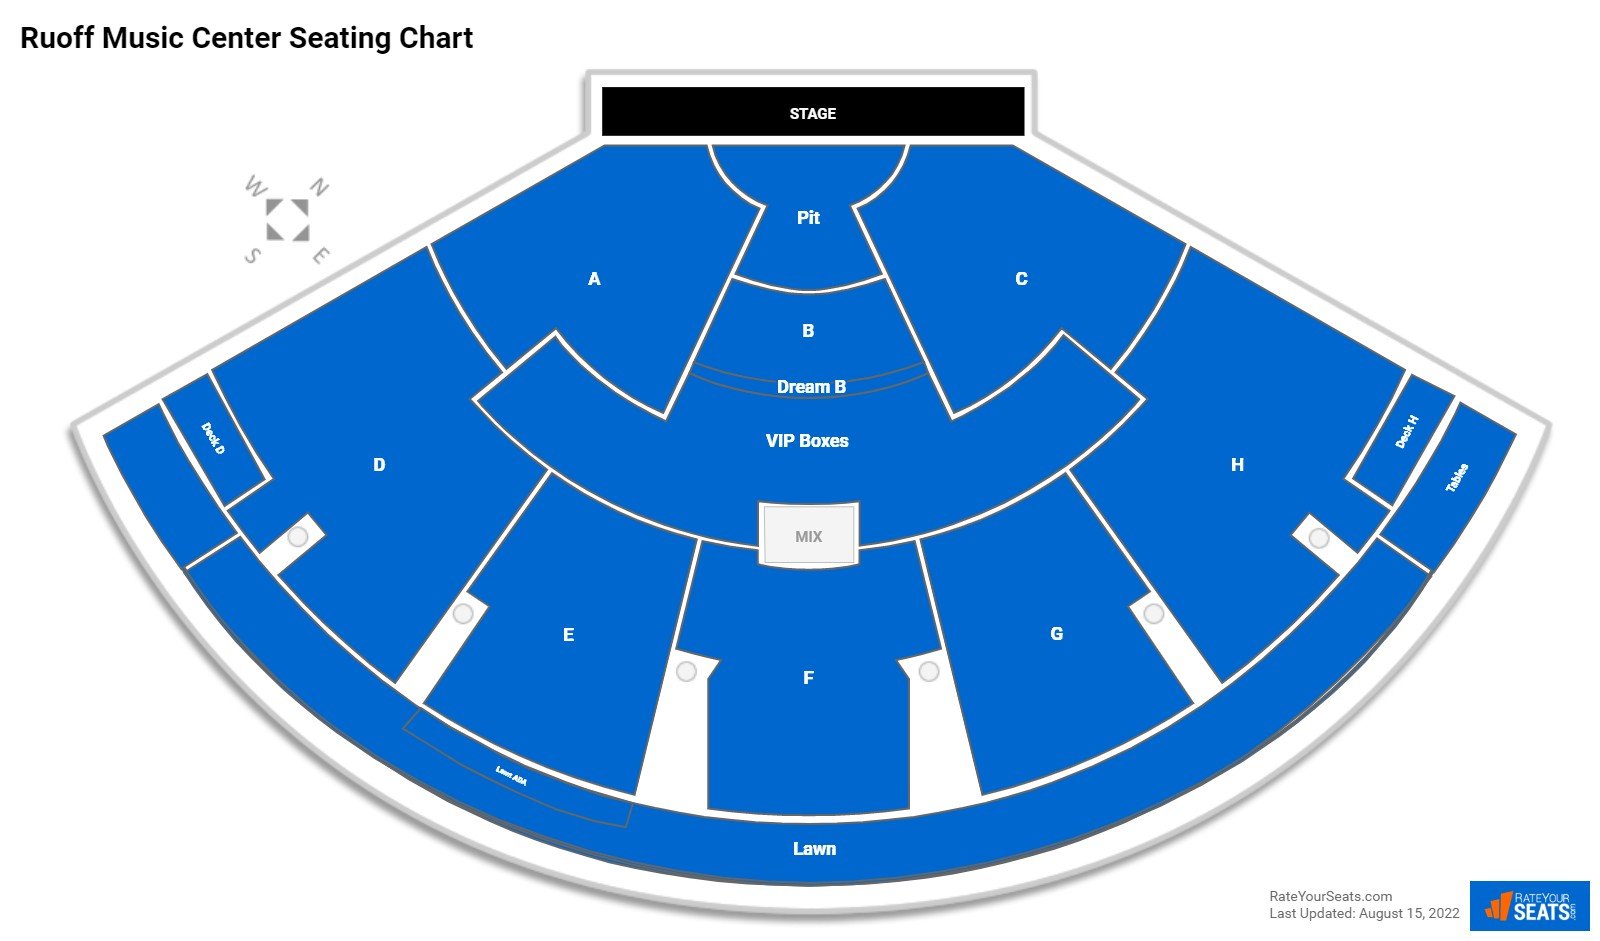 Ruoff Music Center Seating Chart